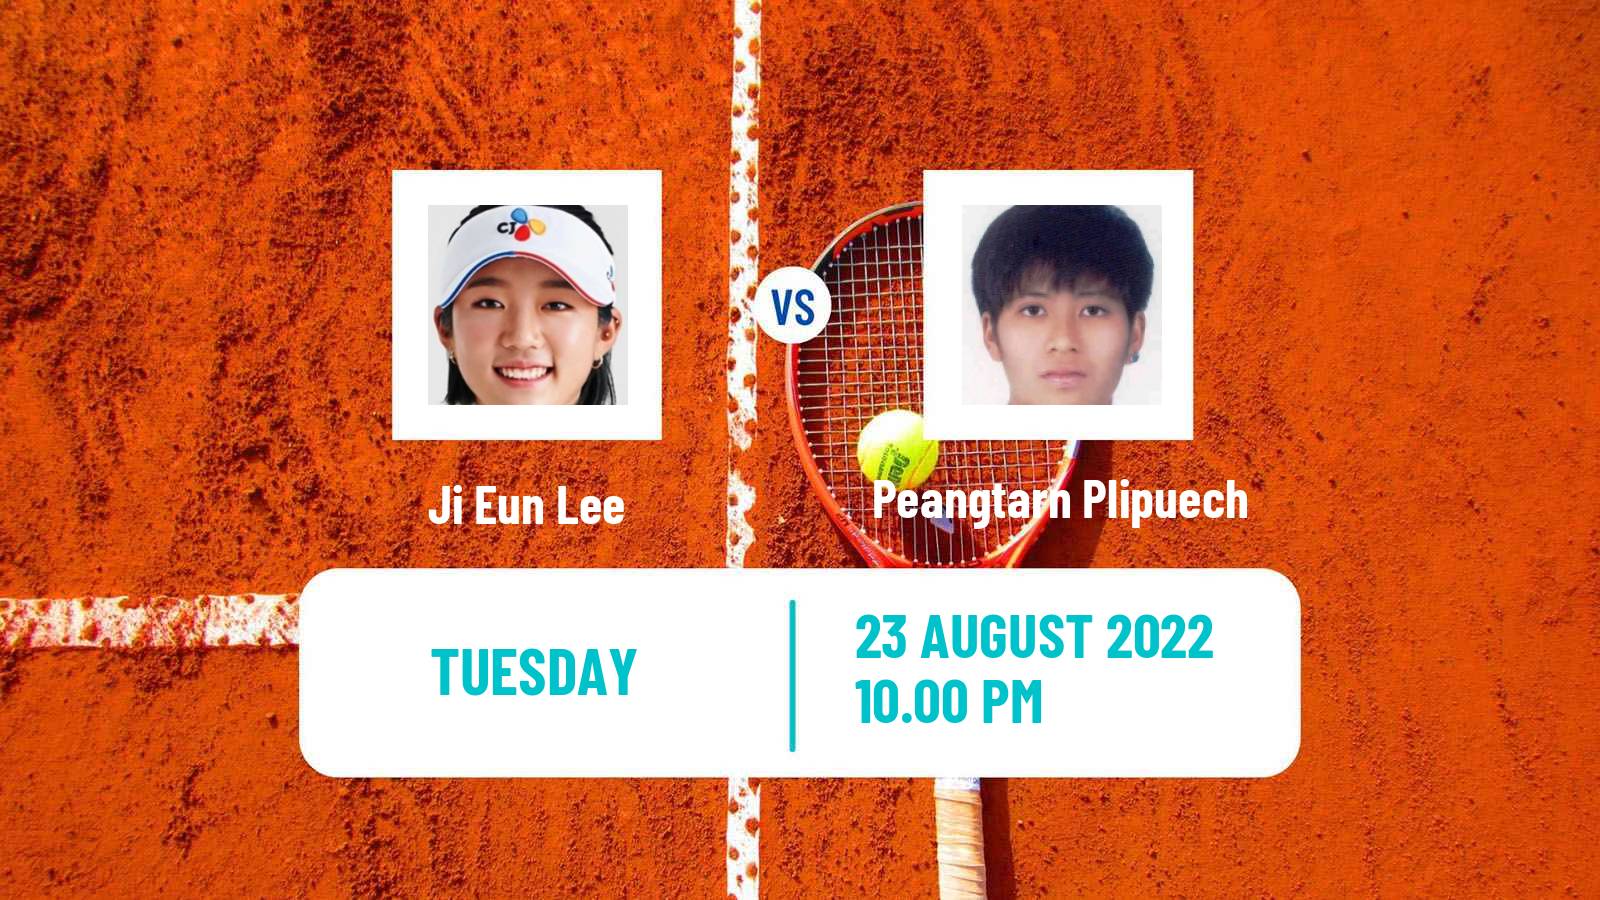 Tennis ITF Tournaments Ji Eun Lee - Peangtarn Plipuech